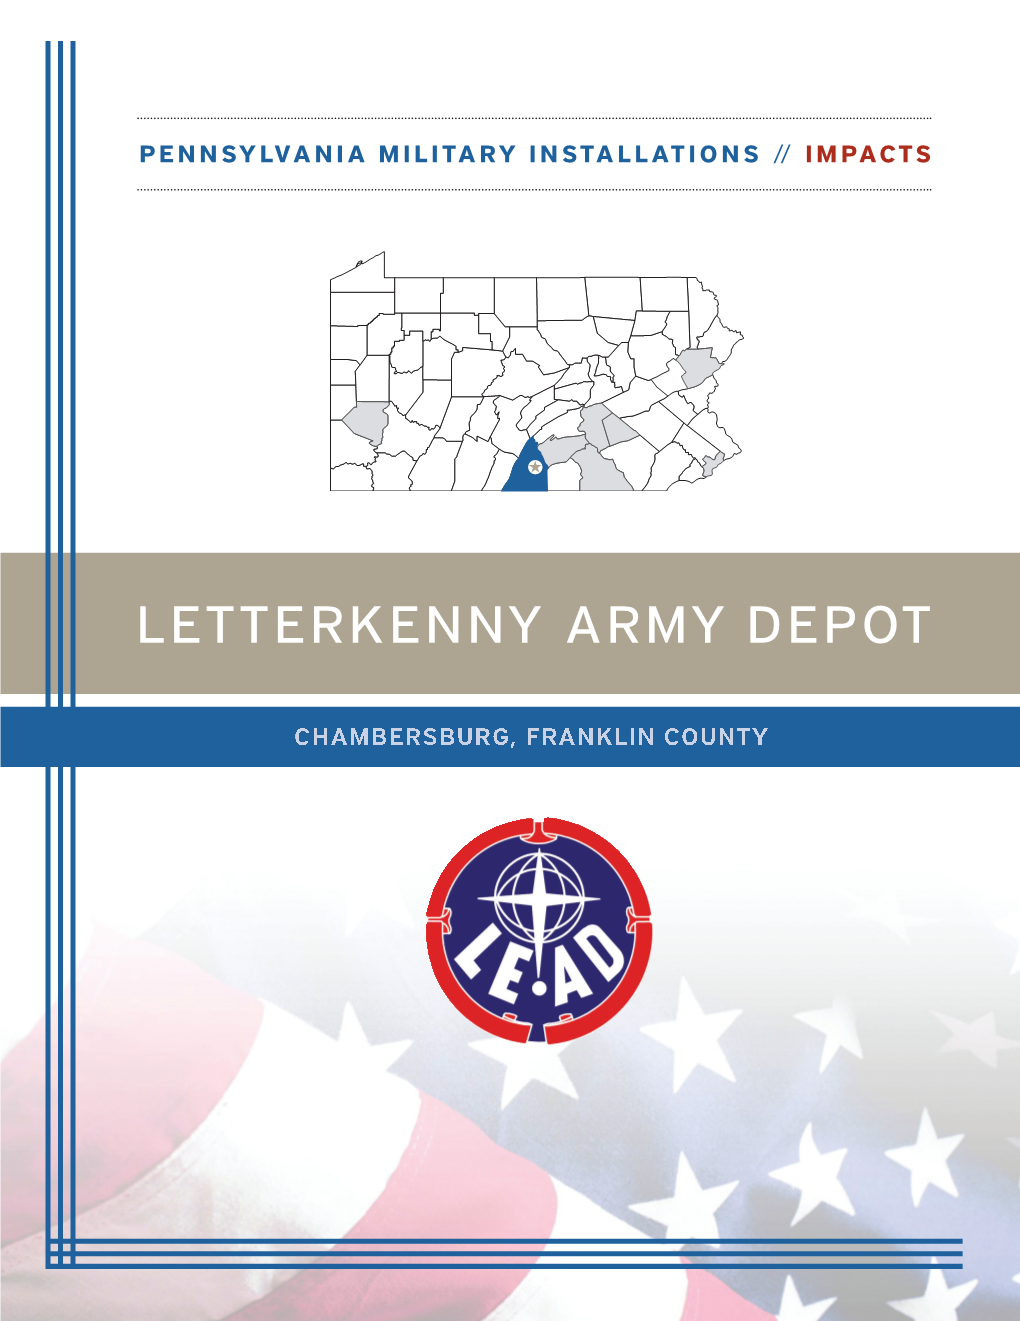 Letterkenny Army Depot, Chambersburg